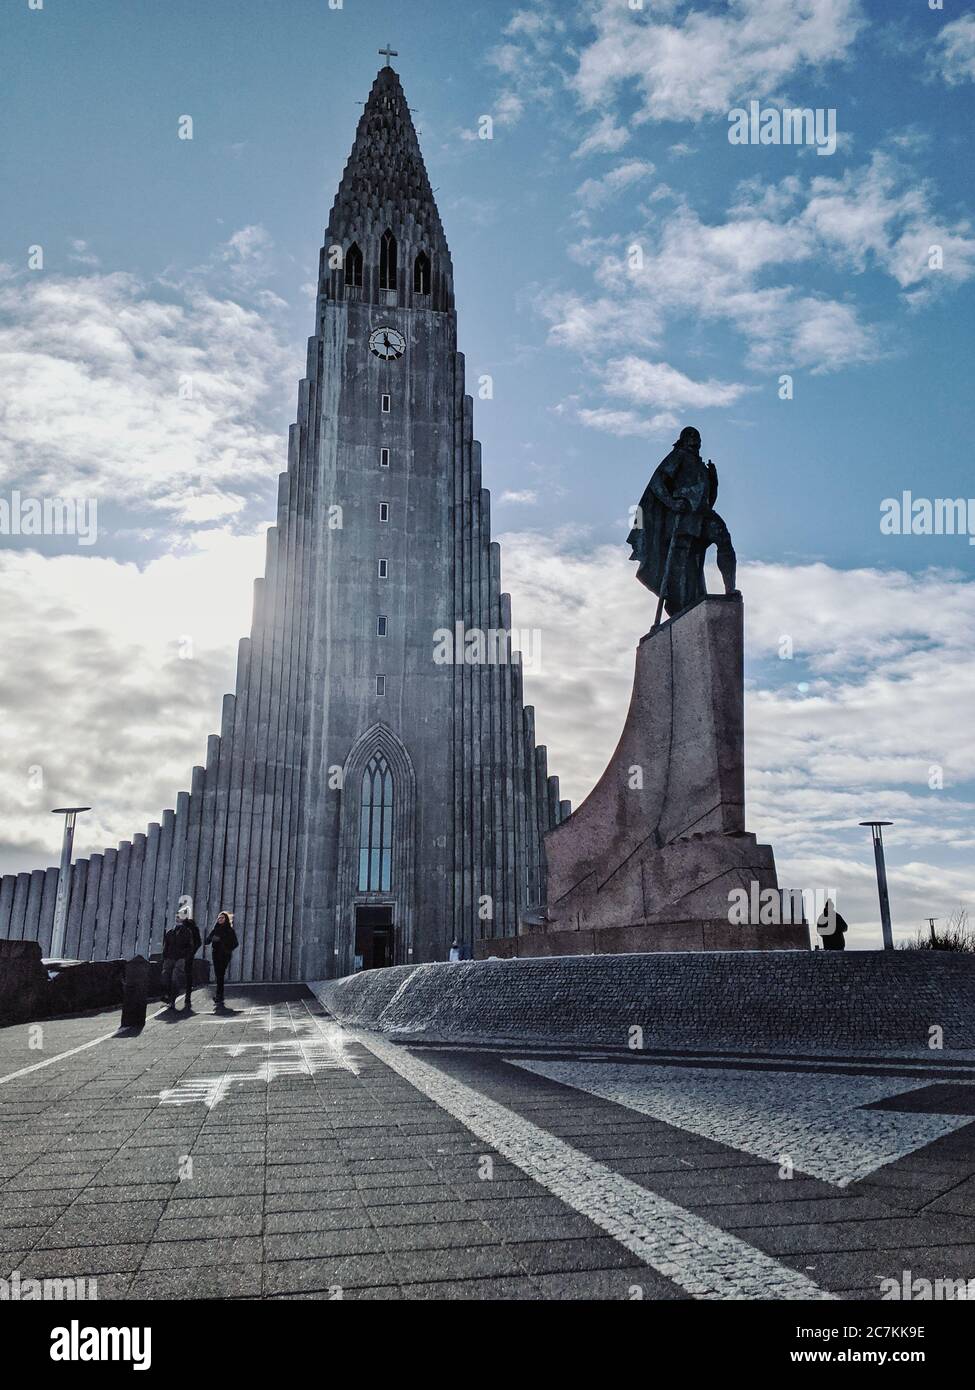 Parish church 'Hallgrímskirkja' with the statue of the Icelandic explorer Leif Eriksson in Iceland's capital Reykjavik Stock Photo